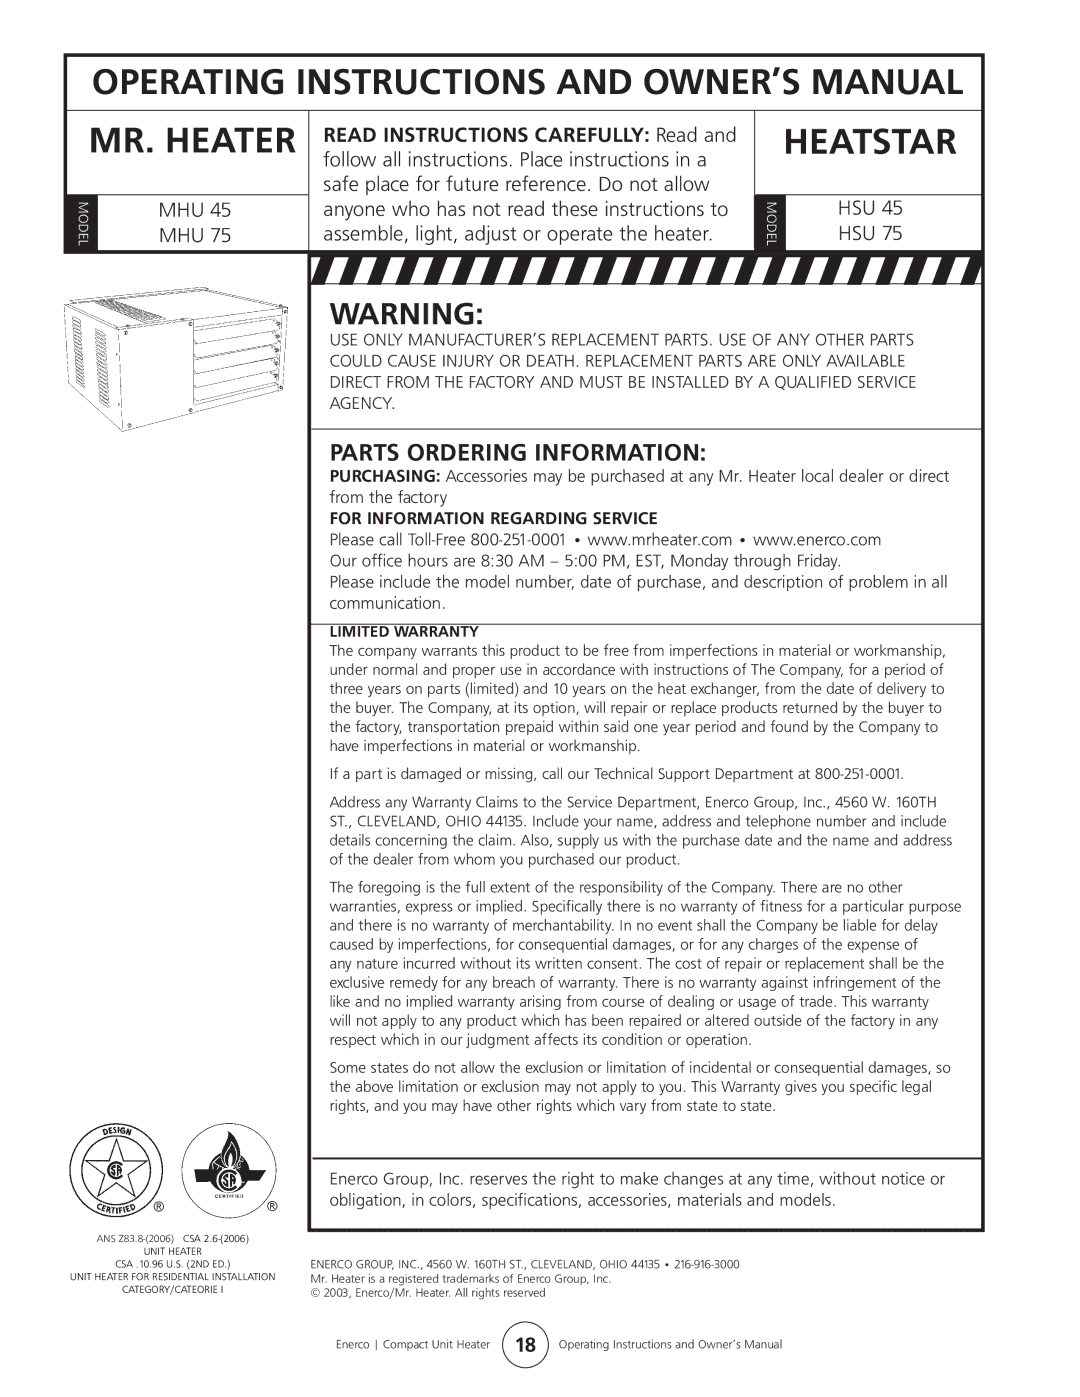 Enerco HSU 75, HSU 45 operating instructions Parts Ordering Information, For Information Regarding Service, Limited Warranty 